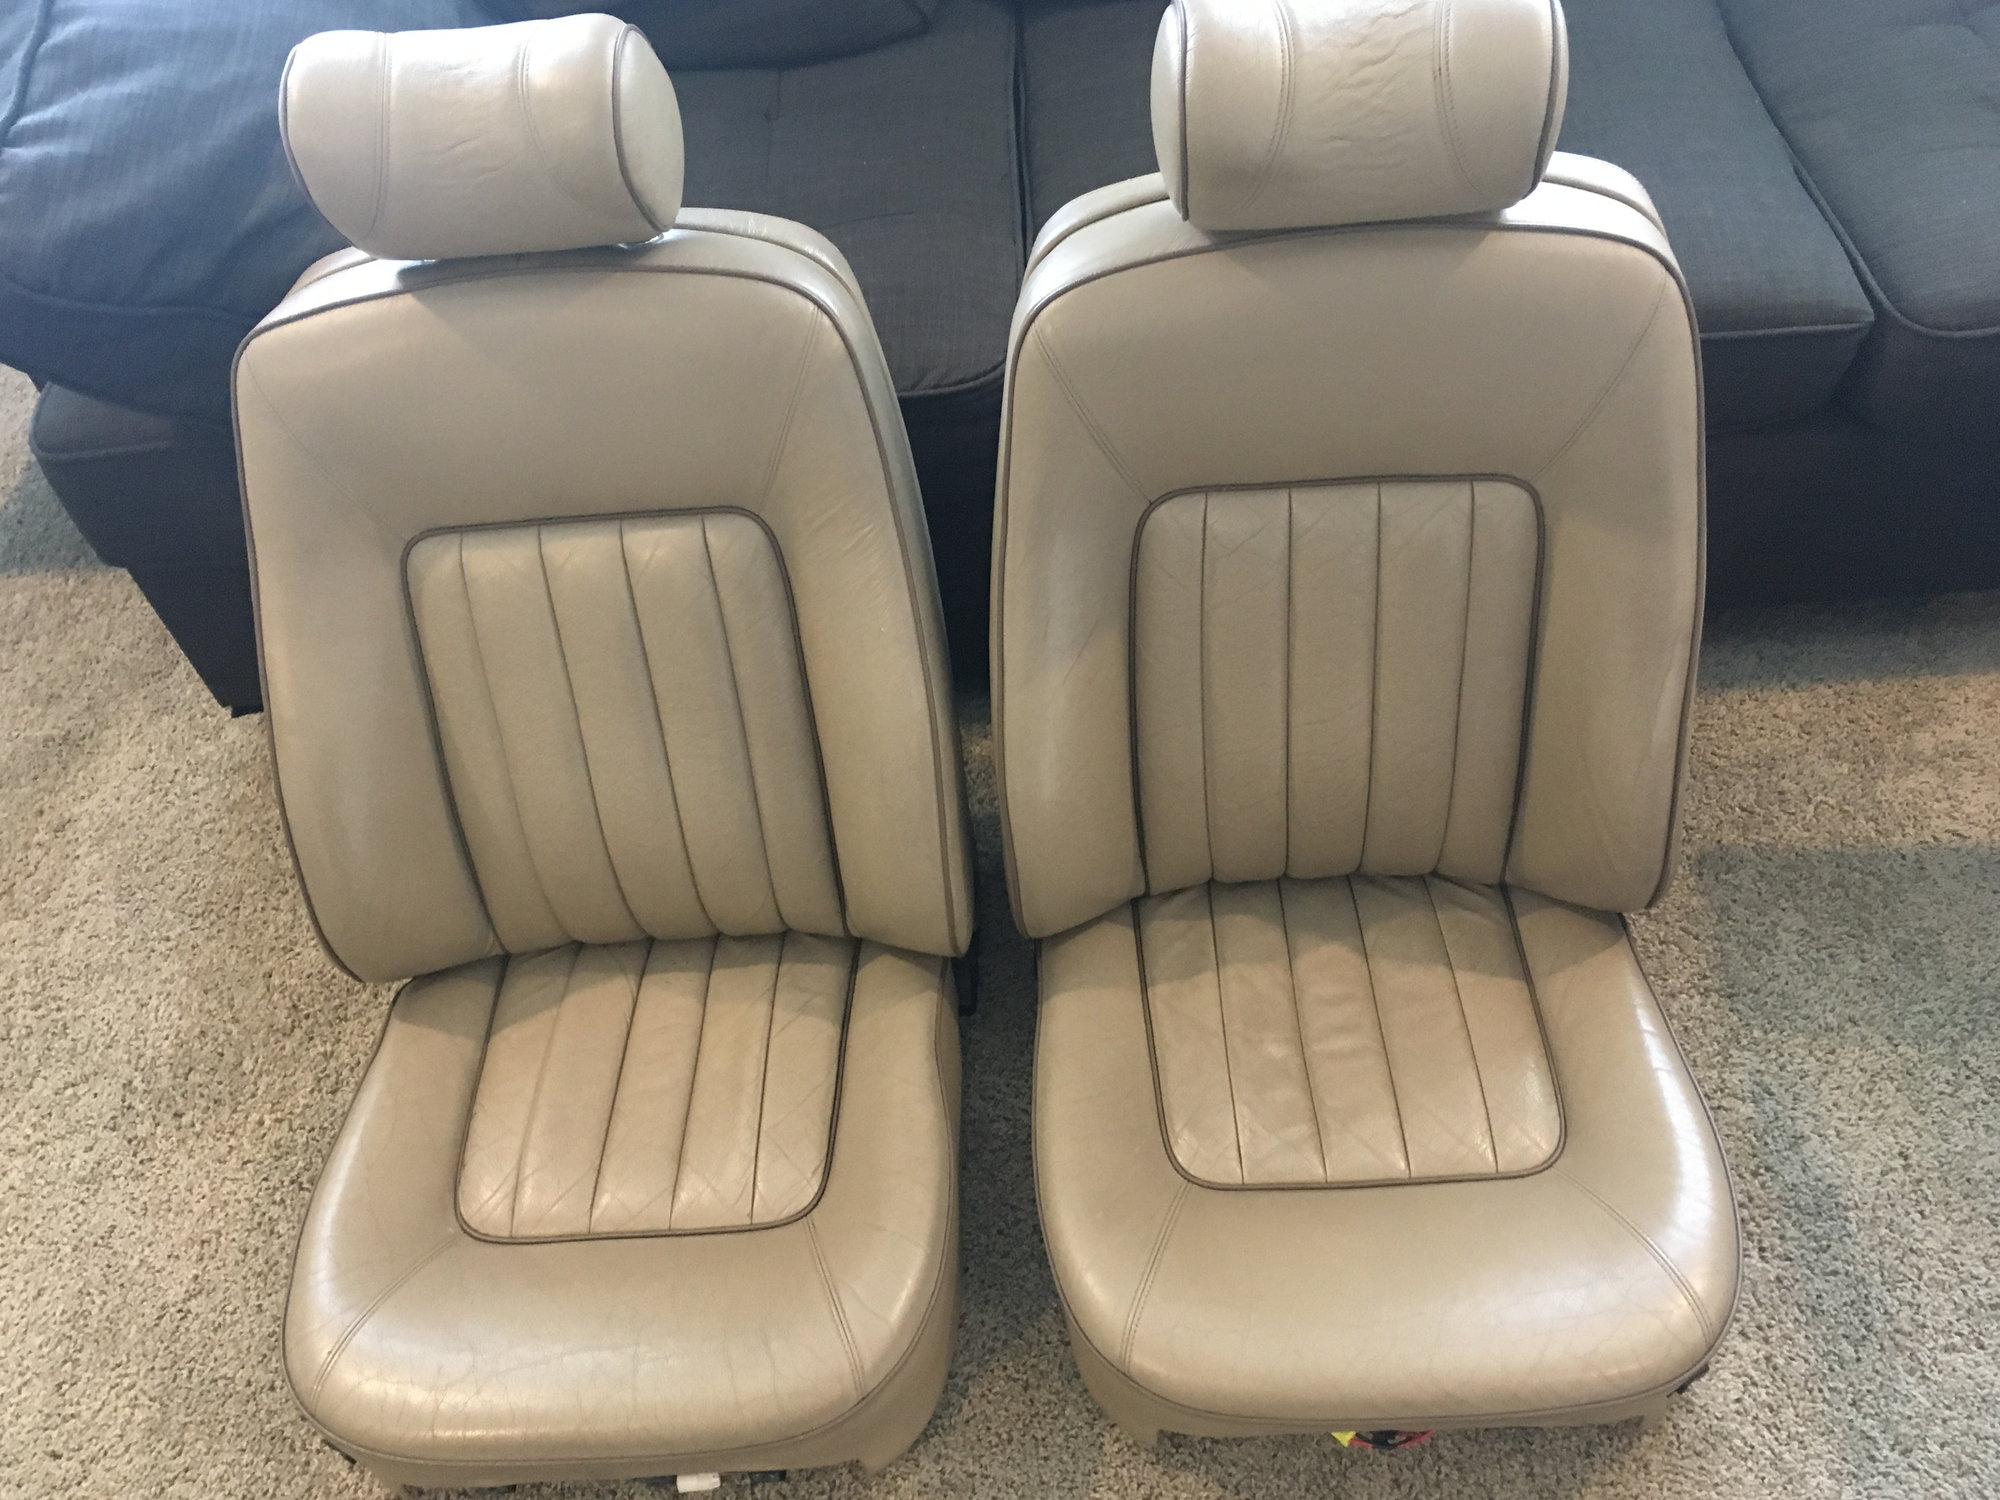 Interior/Upholstery - Selling Seats, door panels, interior pieces. 92-94 XJ6 Vanden Plas. Doeskin color. - Used - 1992 to 1994 Jaguar XJ6 - 1992 to 1994 Jaguar XJ12 - Atlanta, GA 30319, United States